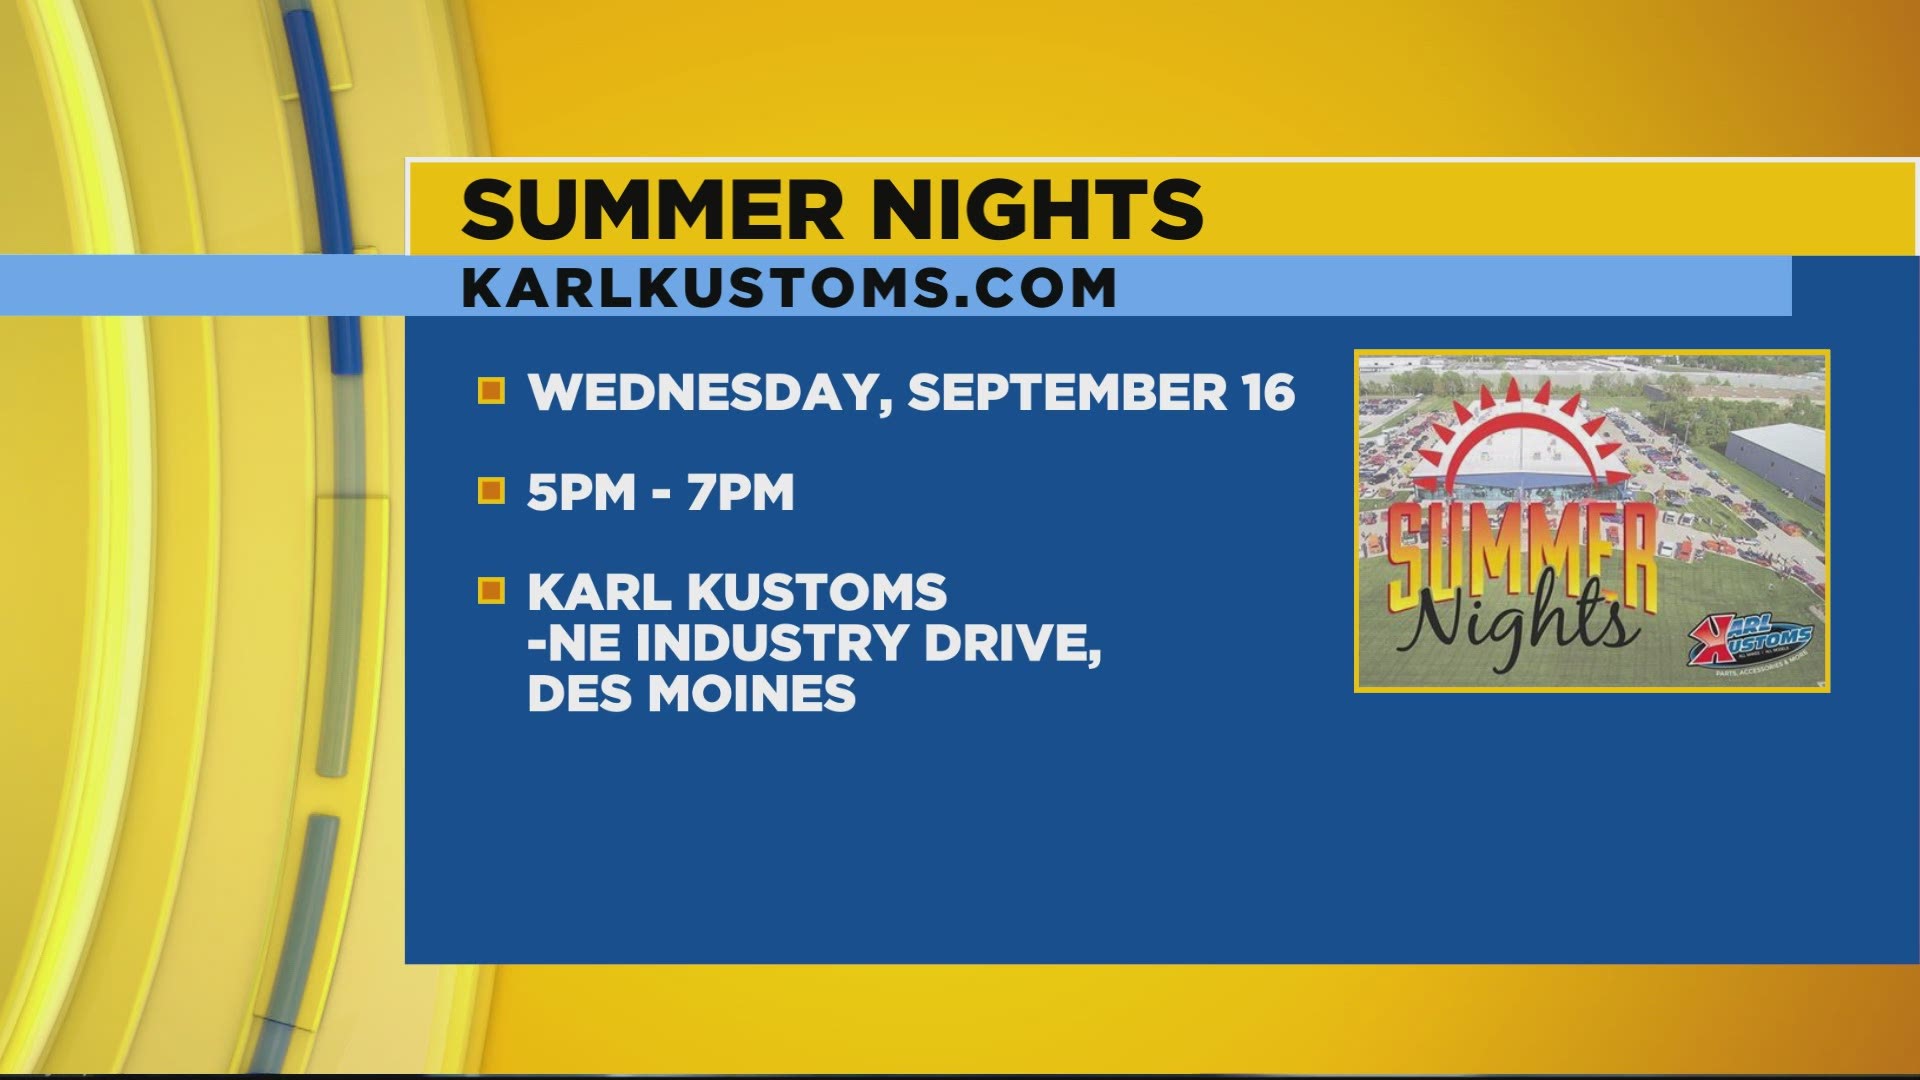 Summer Nights Karl Kustoms is tonight 5-7PM